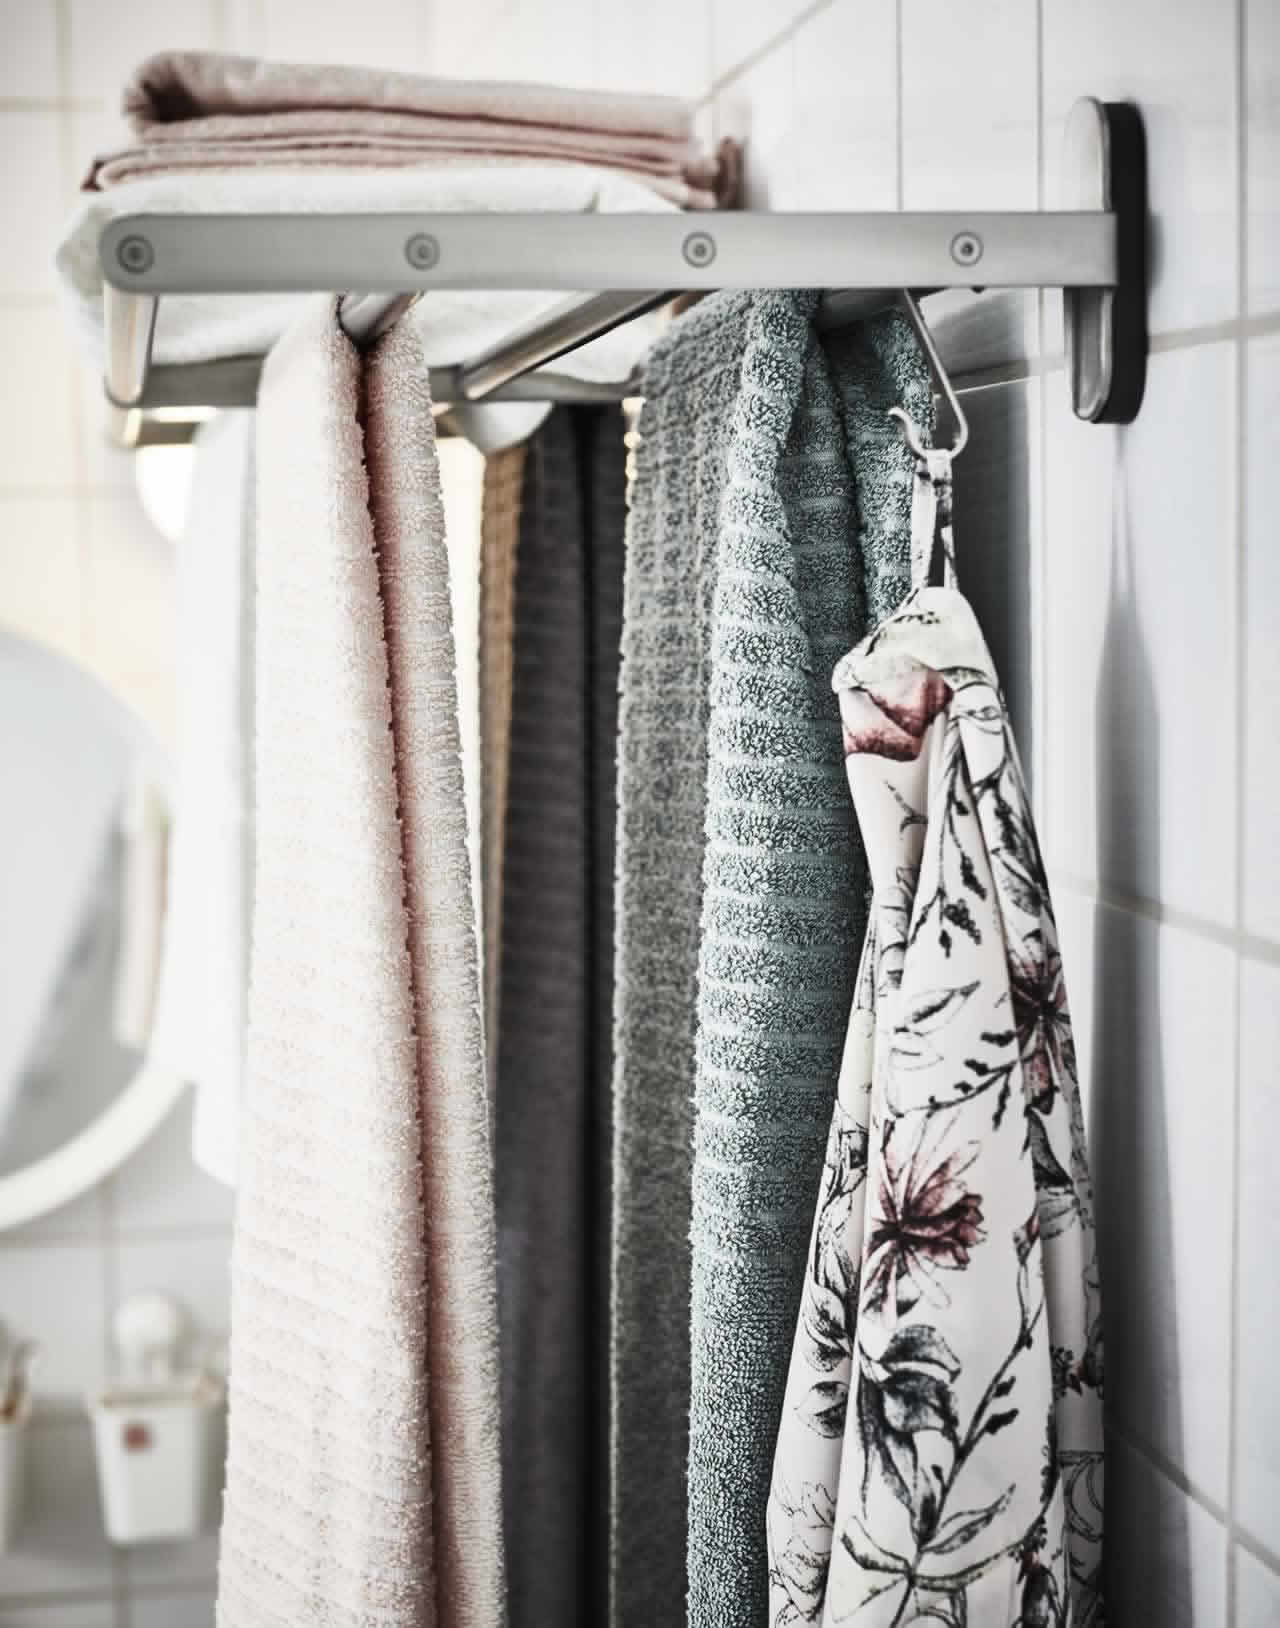 IKEA-a super structured bathroom routine 3